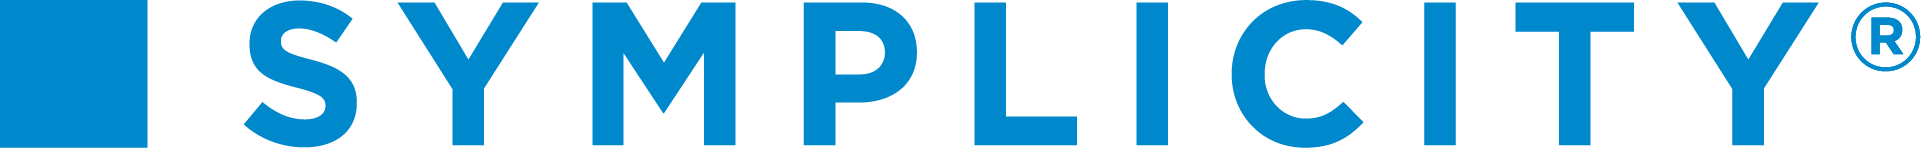 logo_digital_symplicity_reg_blue